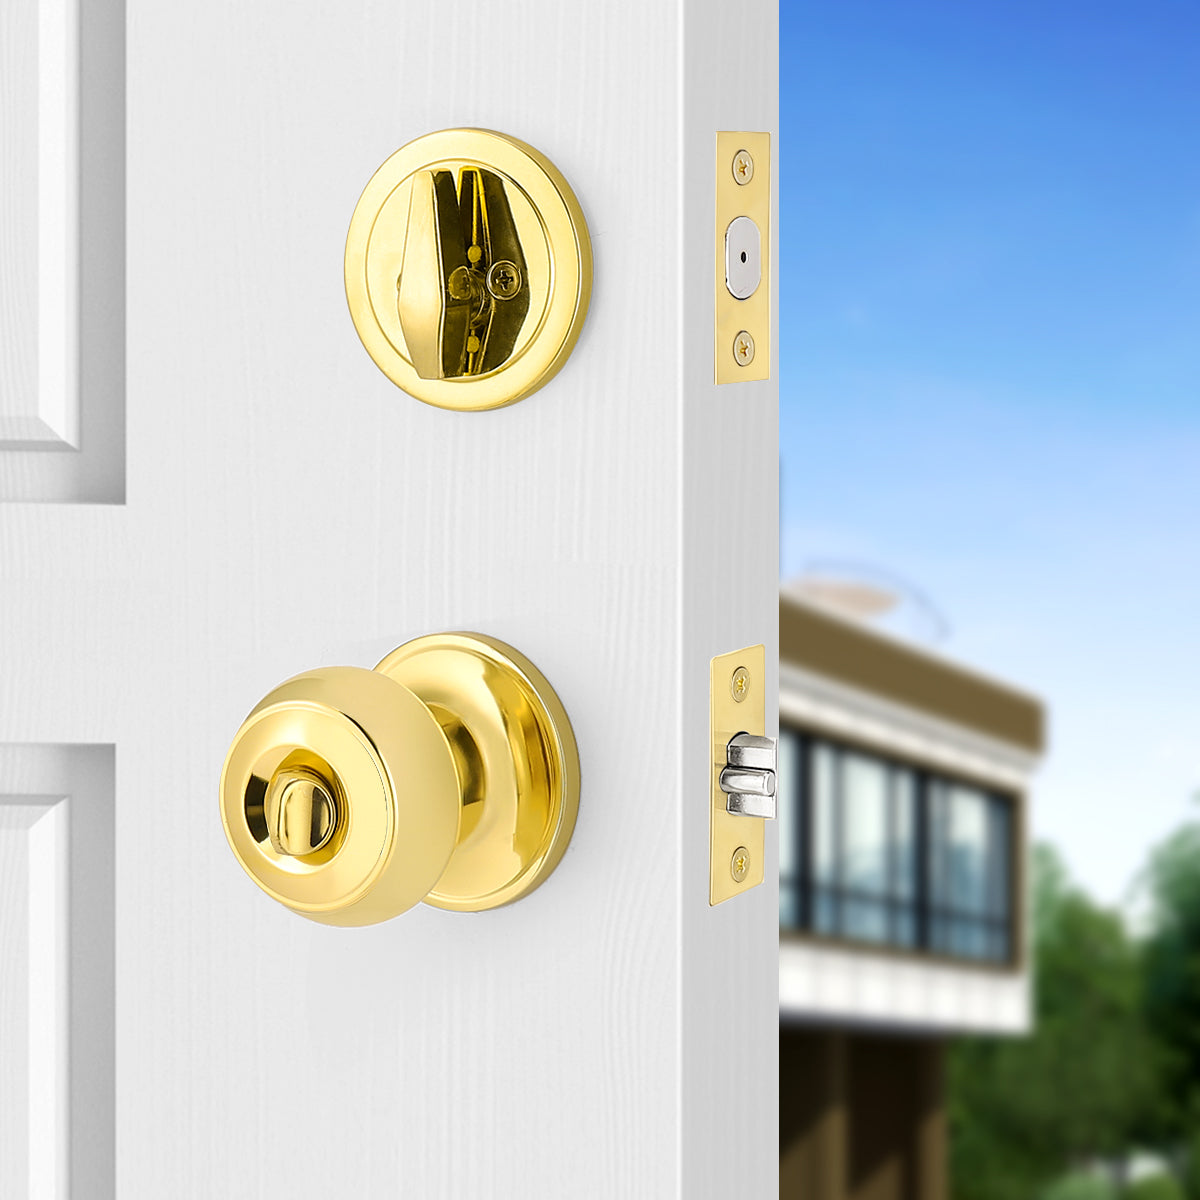 Keyed Alike Entry Door Lock Knob with Single Cylinder Deadbolt, Polished Brass Finish - DL609ET-101PB